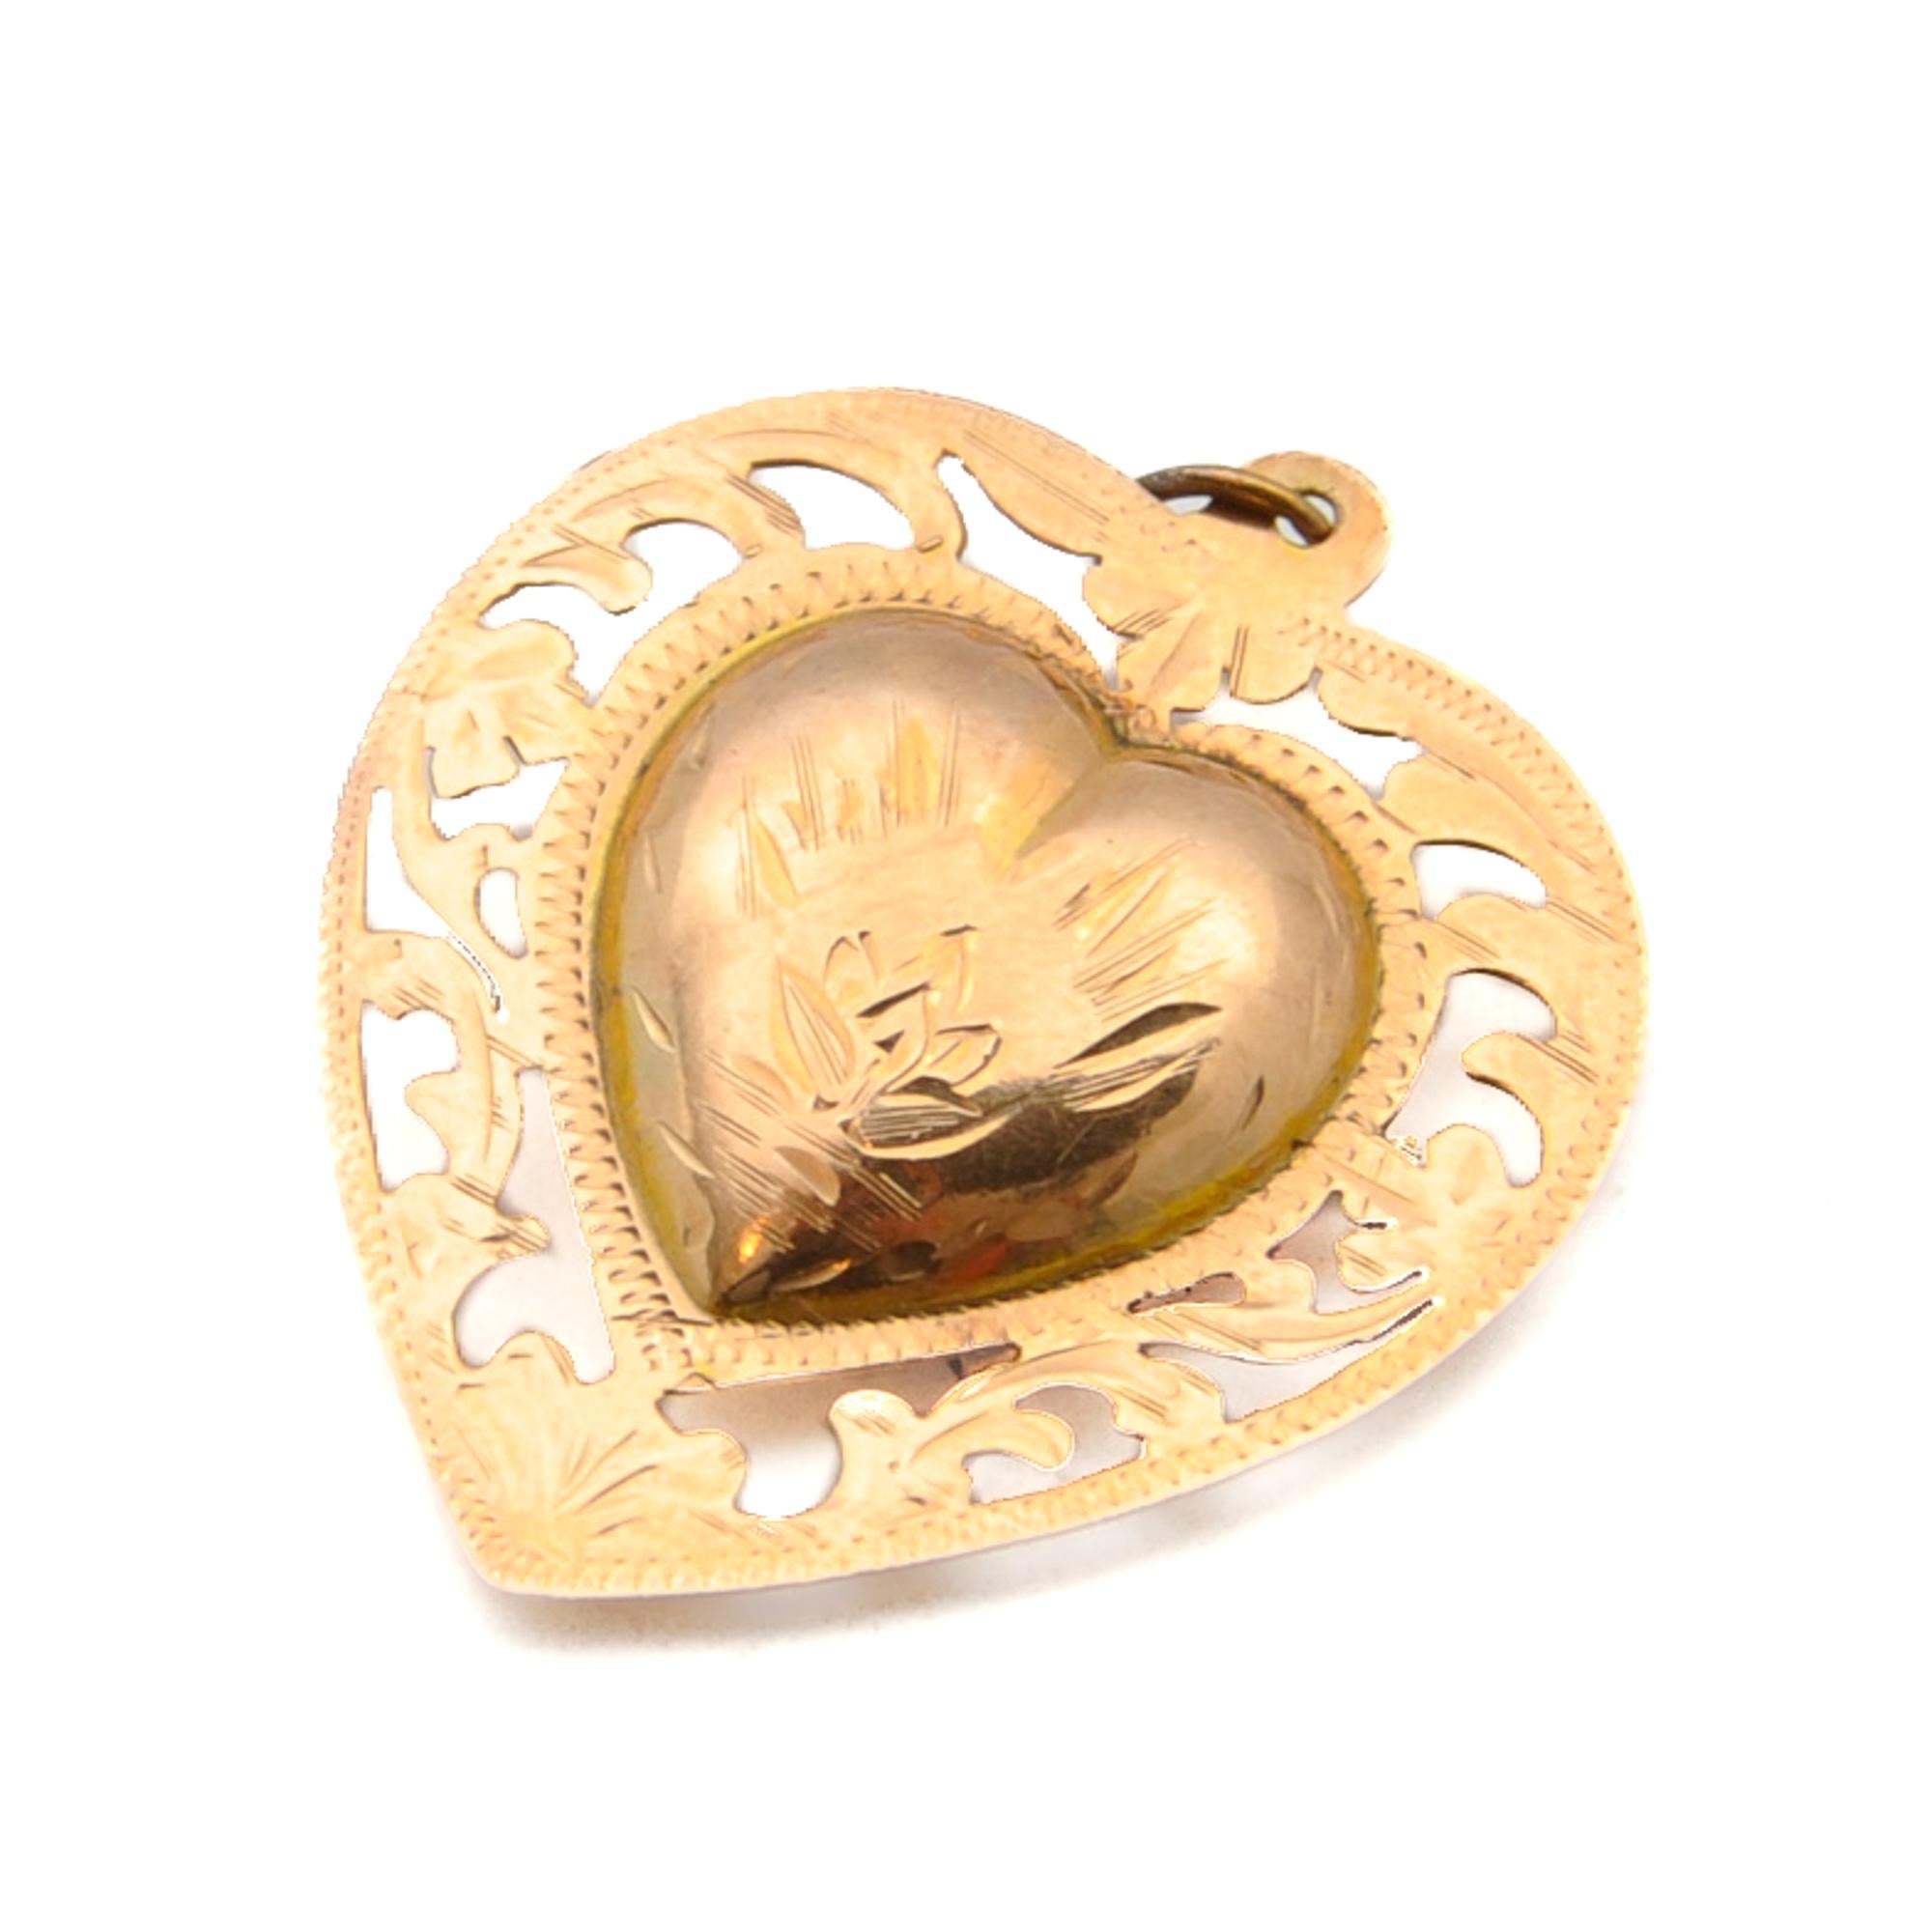 large gold heart locket